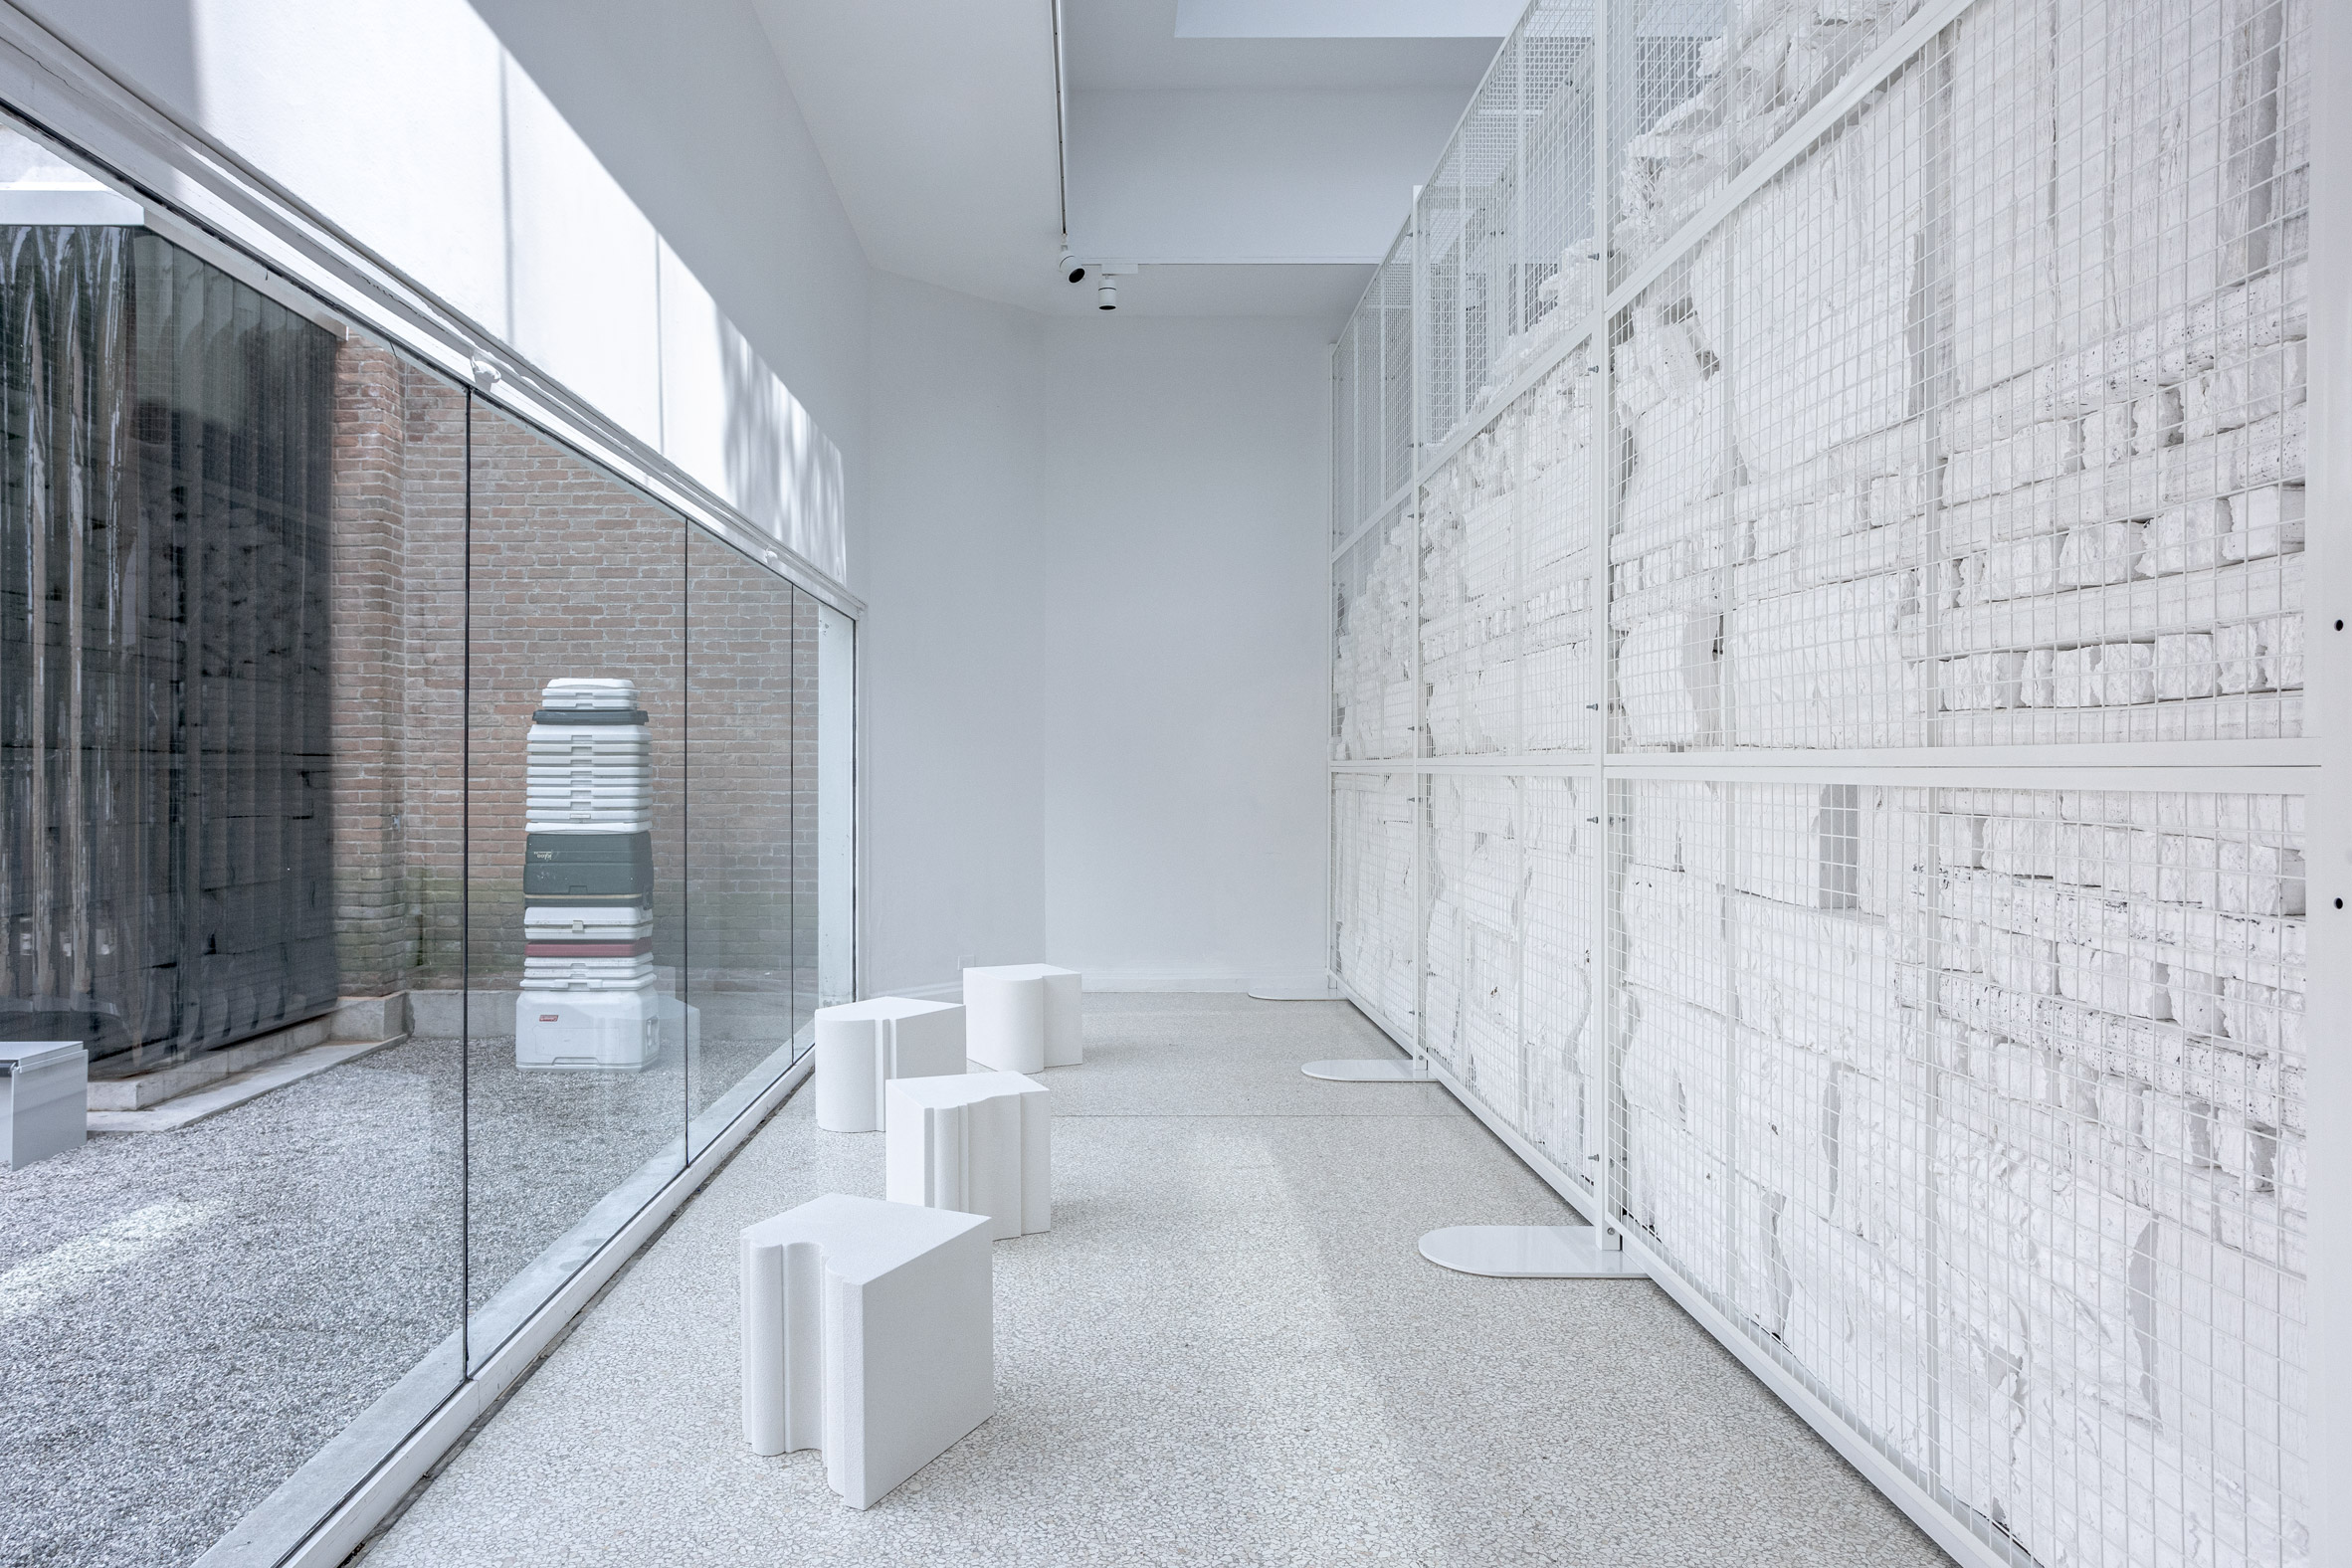 Venice Architecture Biennale trien lam usa